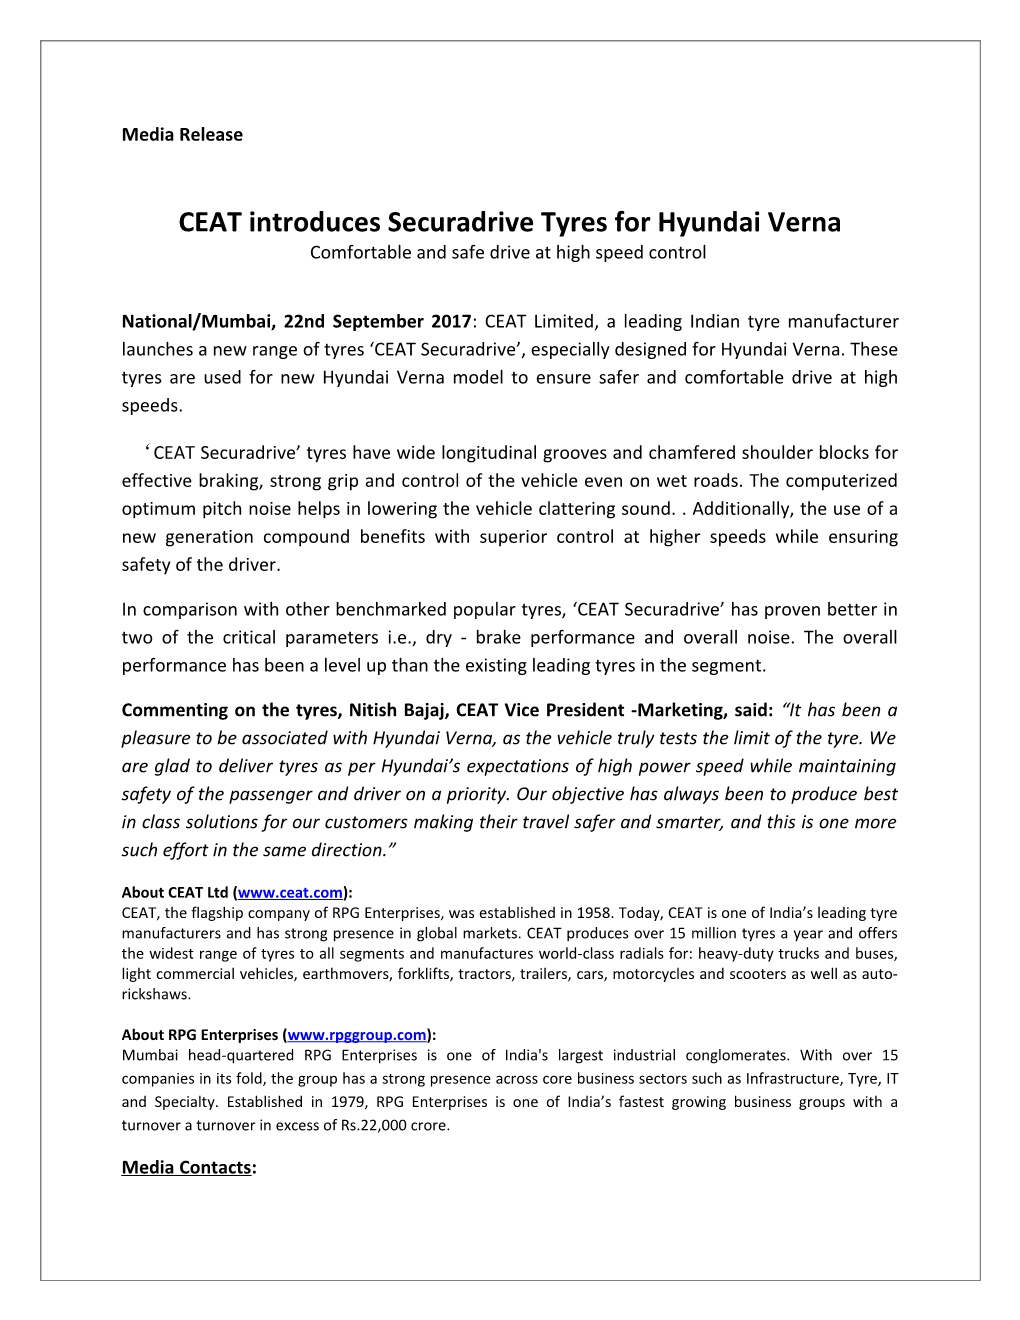 CEAT Introduces Securadrive Tyres for Hyundai Verna